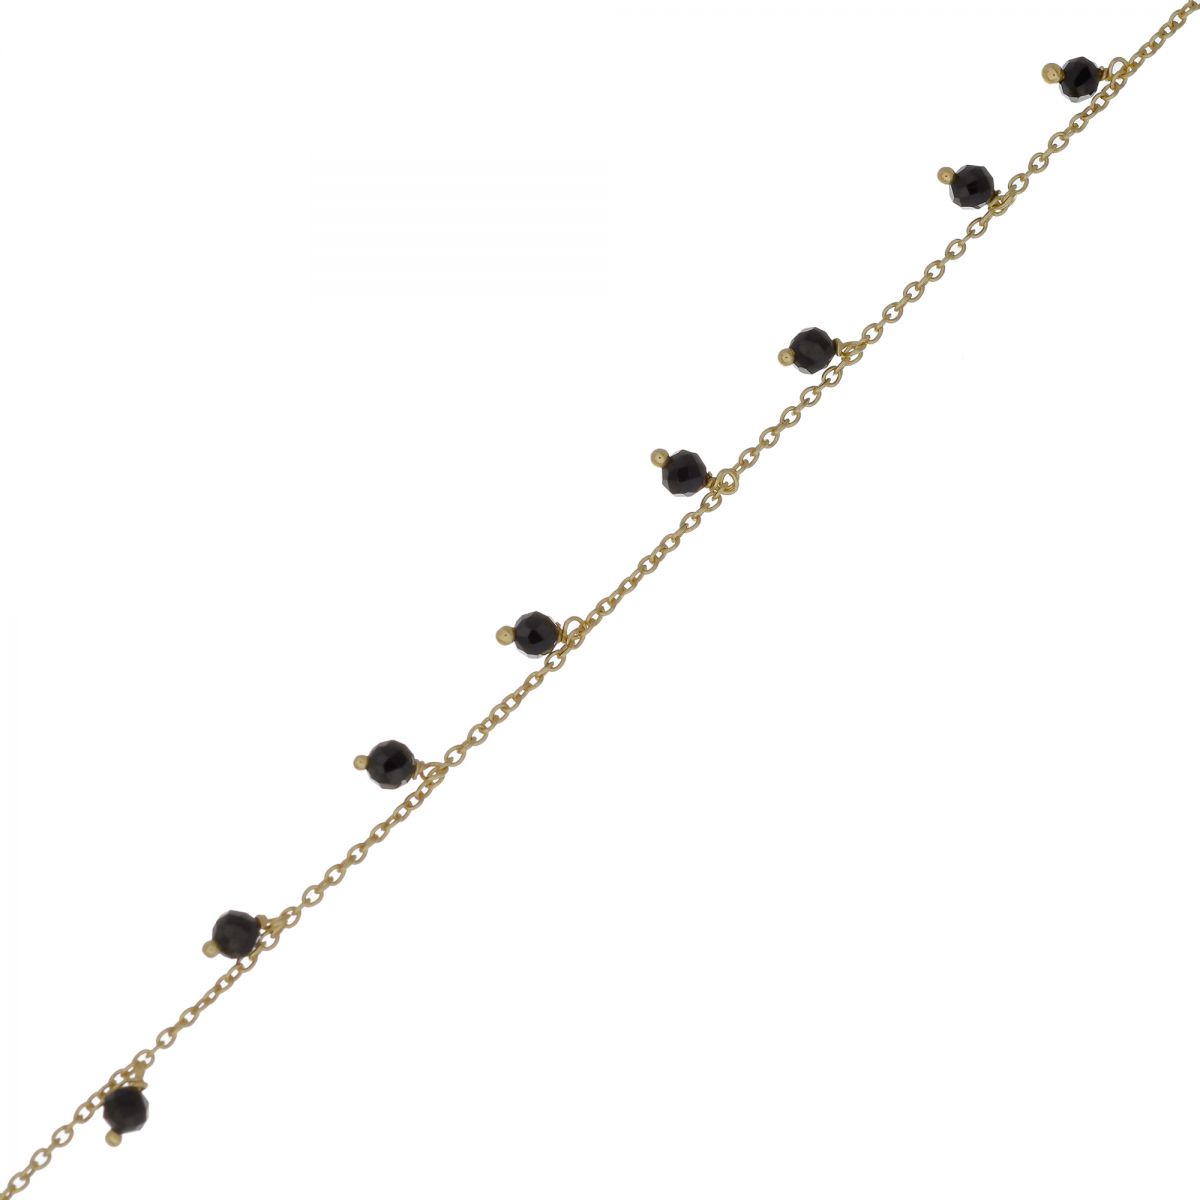 ff bracelet 3mm 8 pendants black agate beads gold plated